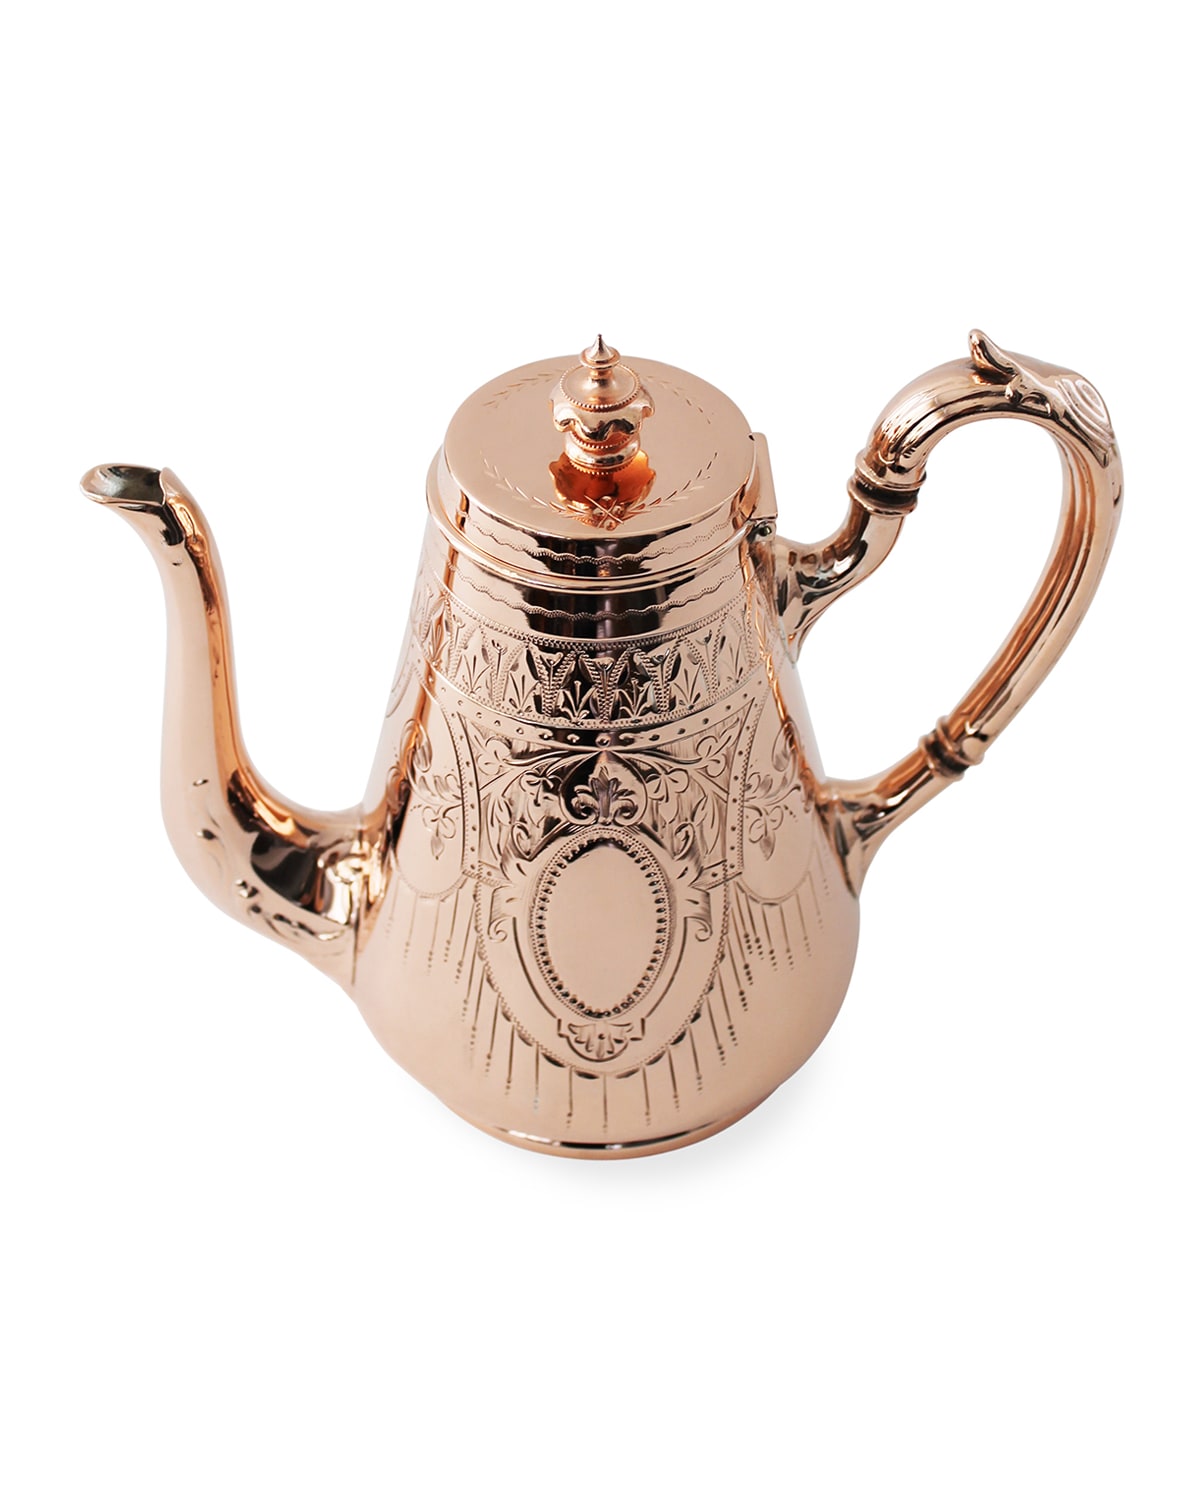 Copper & Silver Tall Coffee Pot #13 (Late 19th Century)